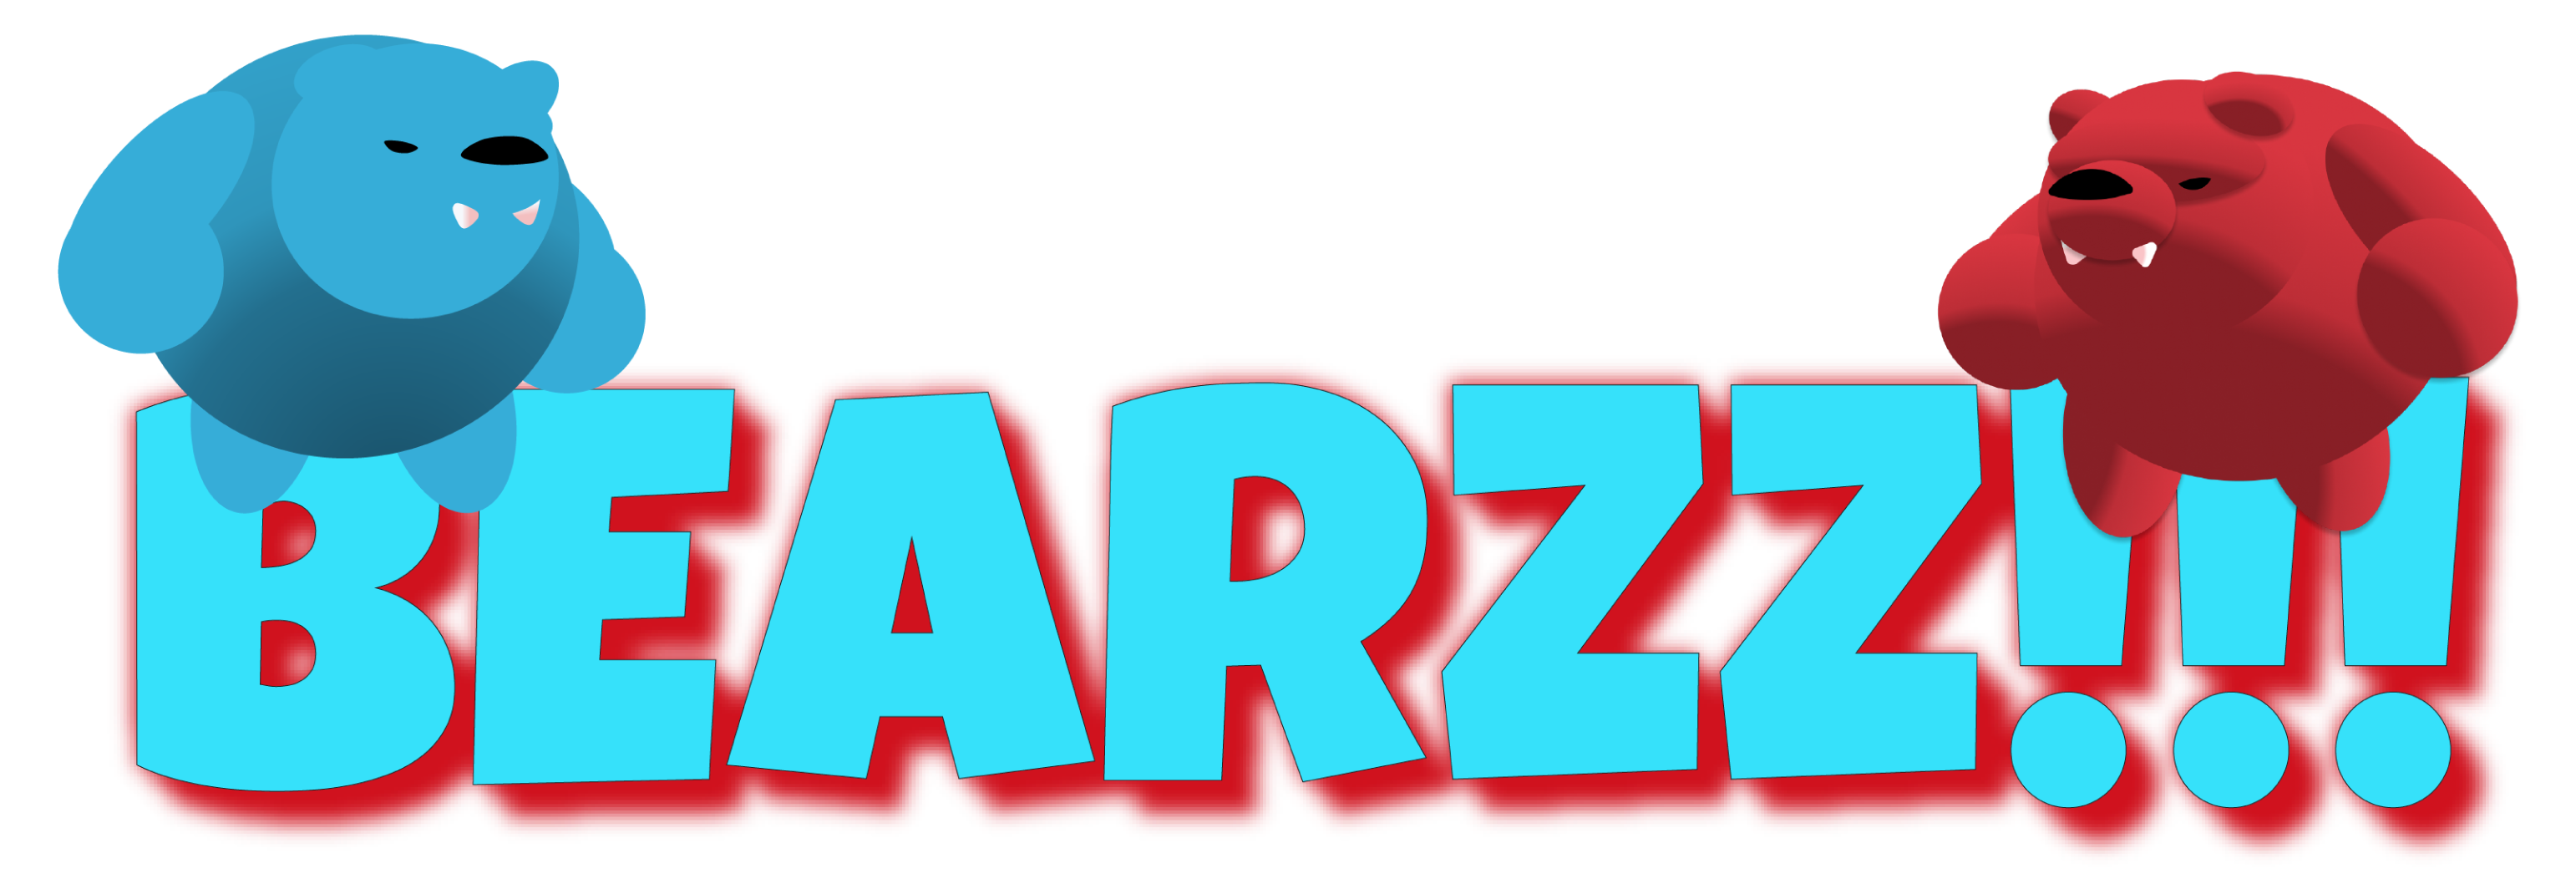 bearzz logo